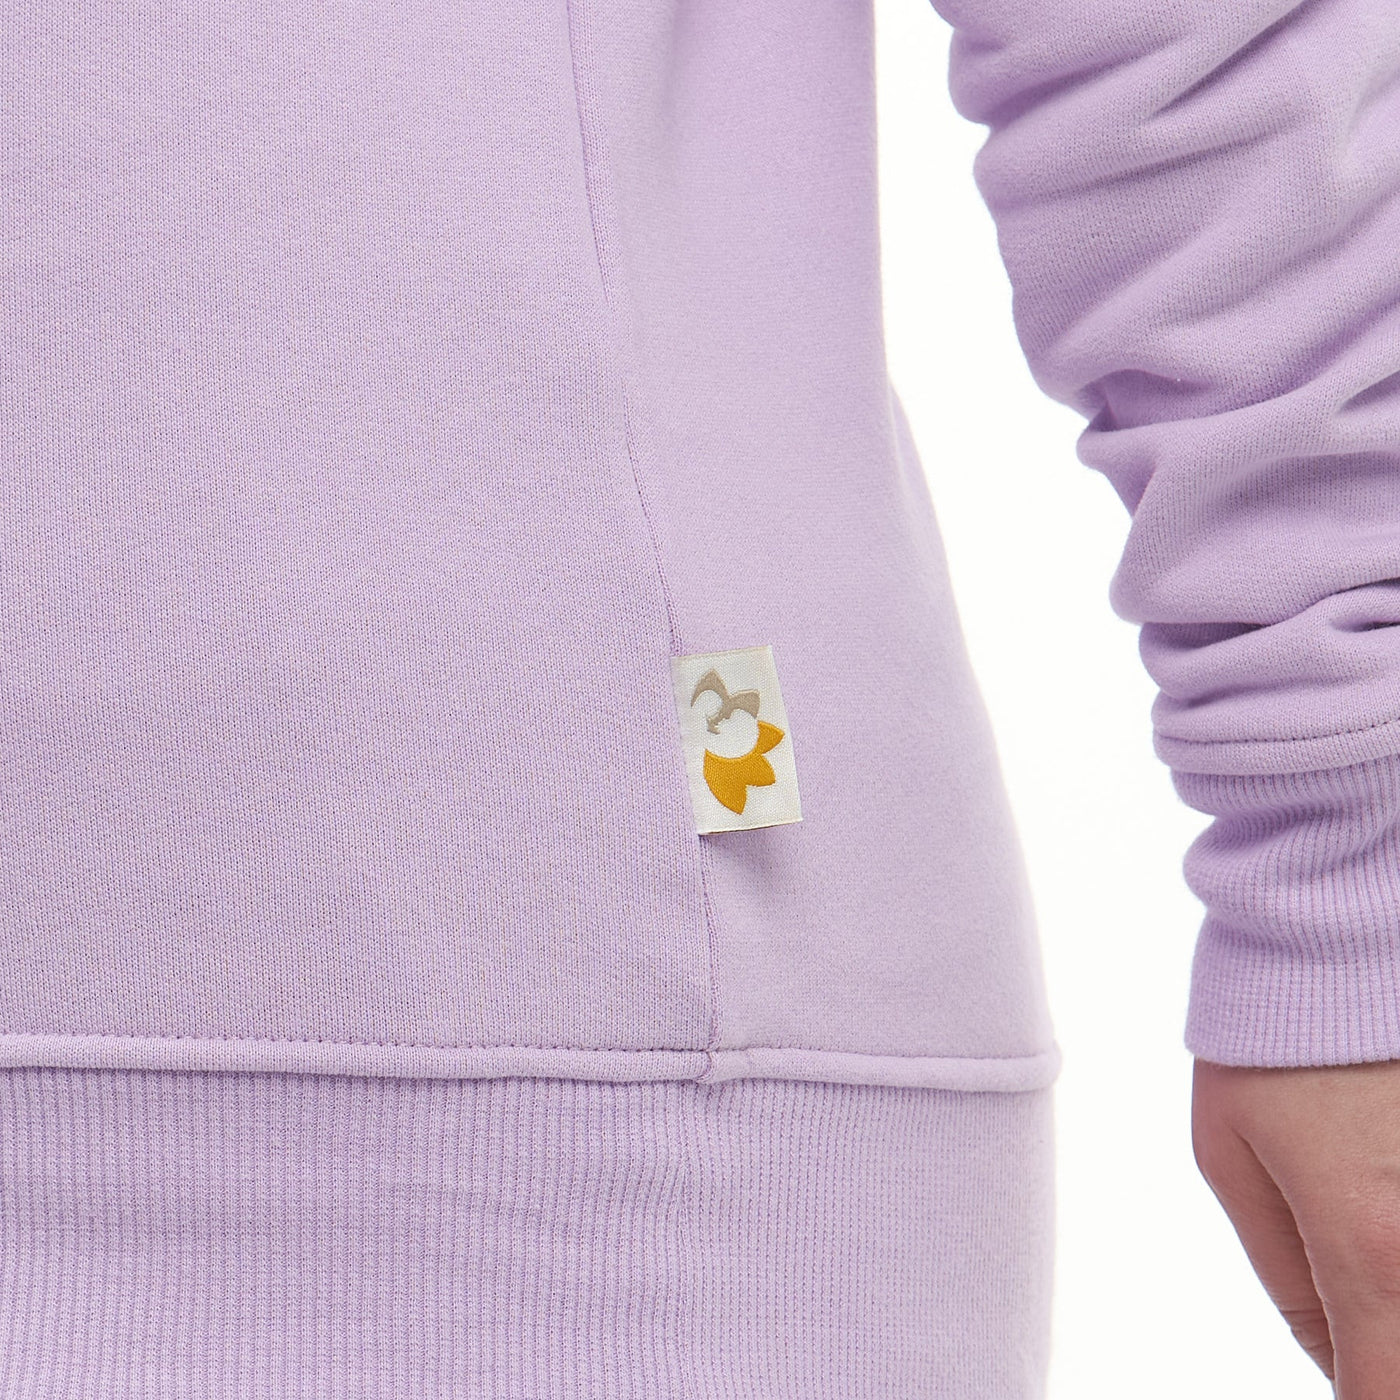 Juno Jack's Embroidered Logo Nursing Mumma Sweatshirt